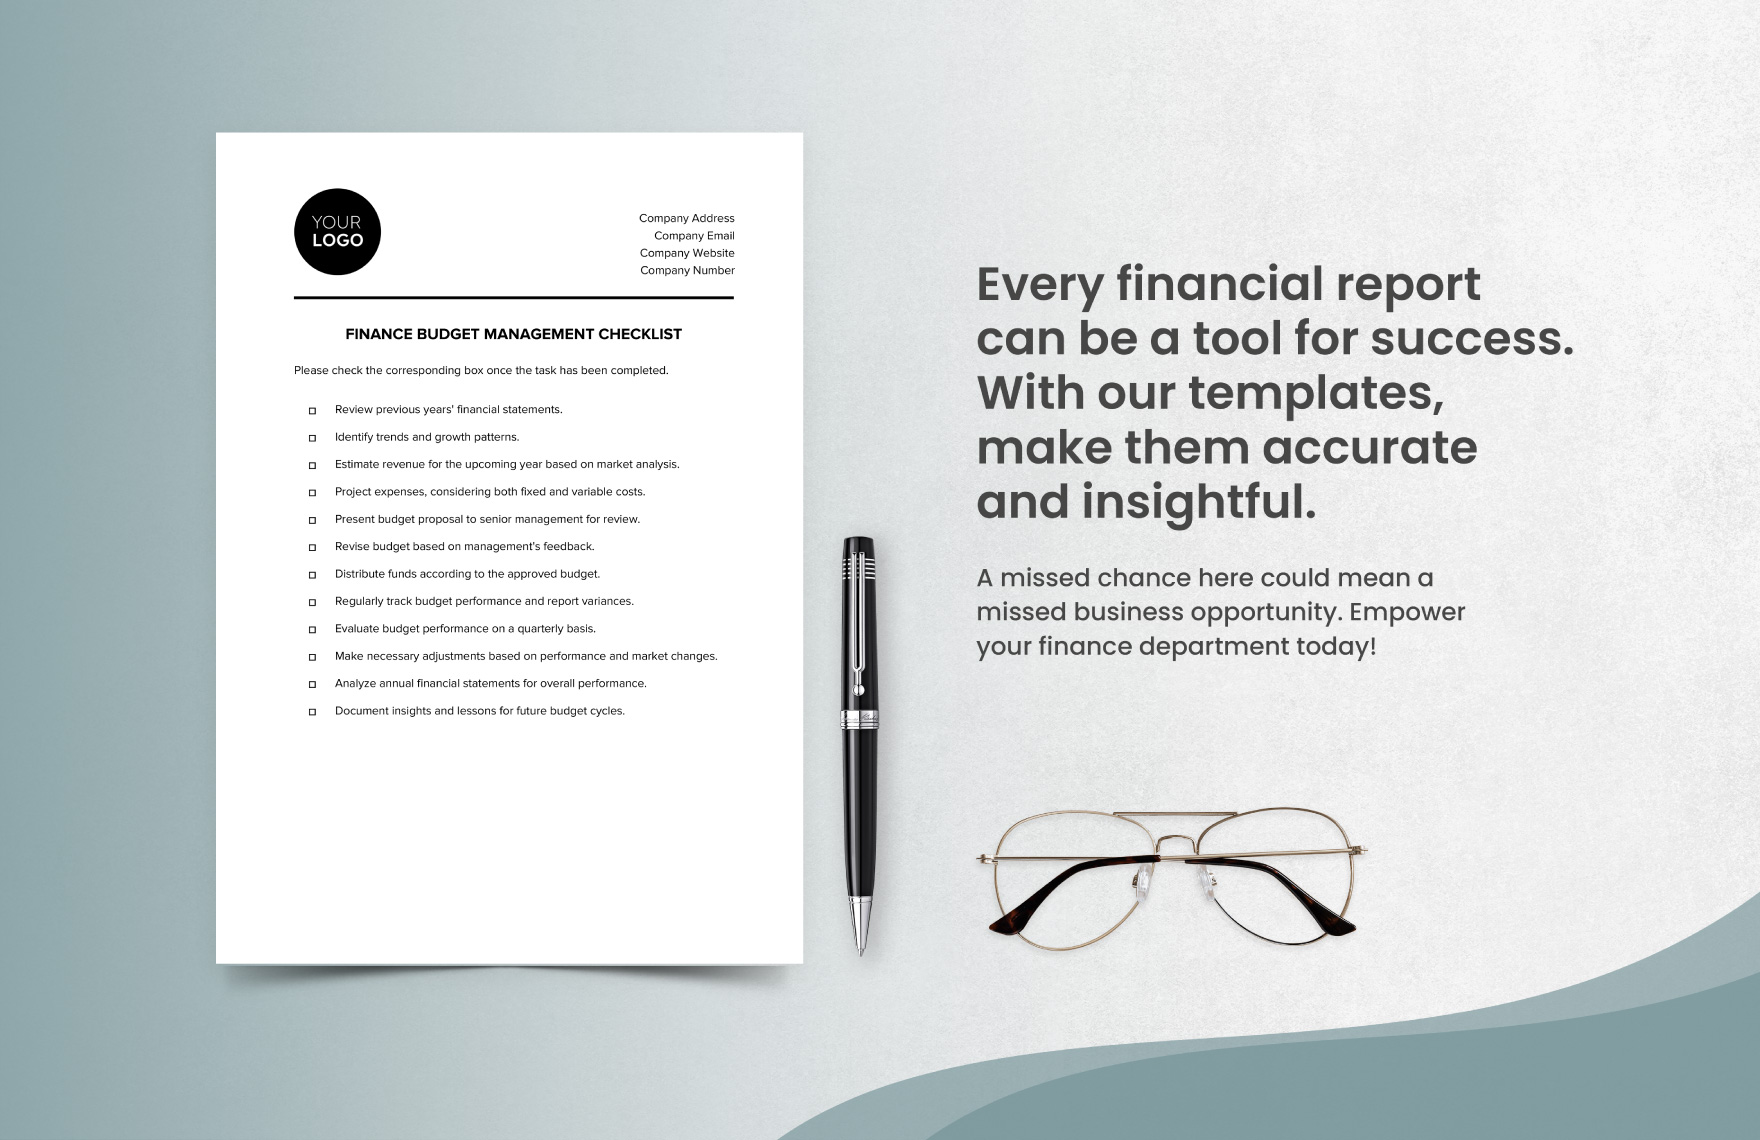 Finance Budget Management Checklist Template